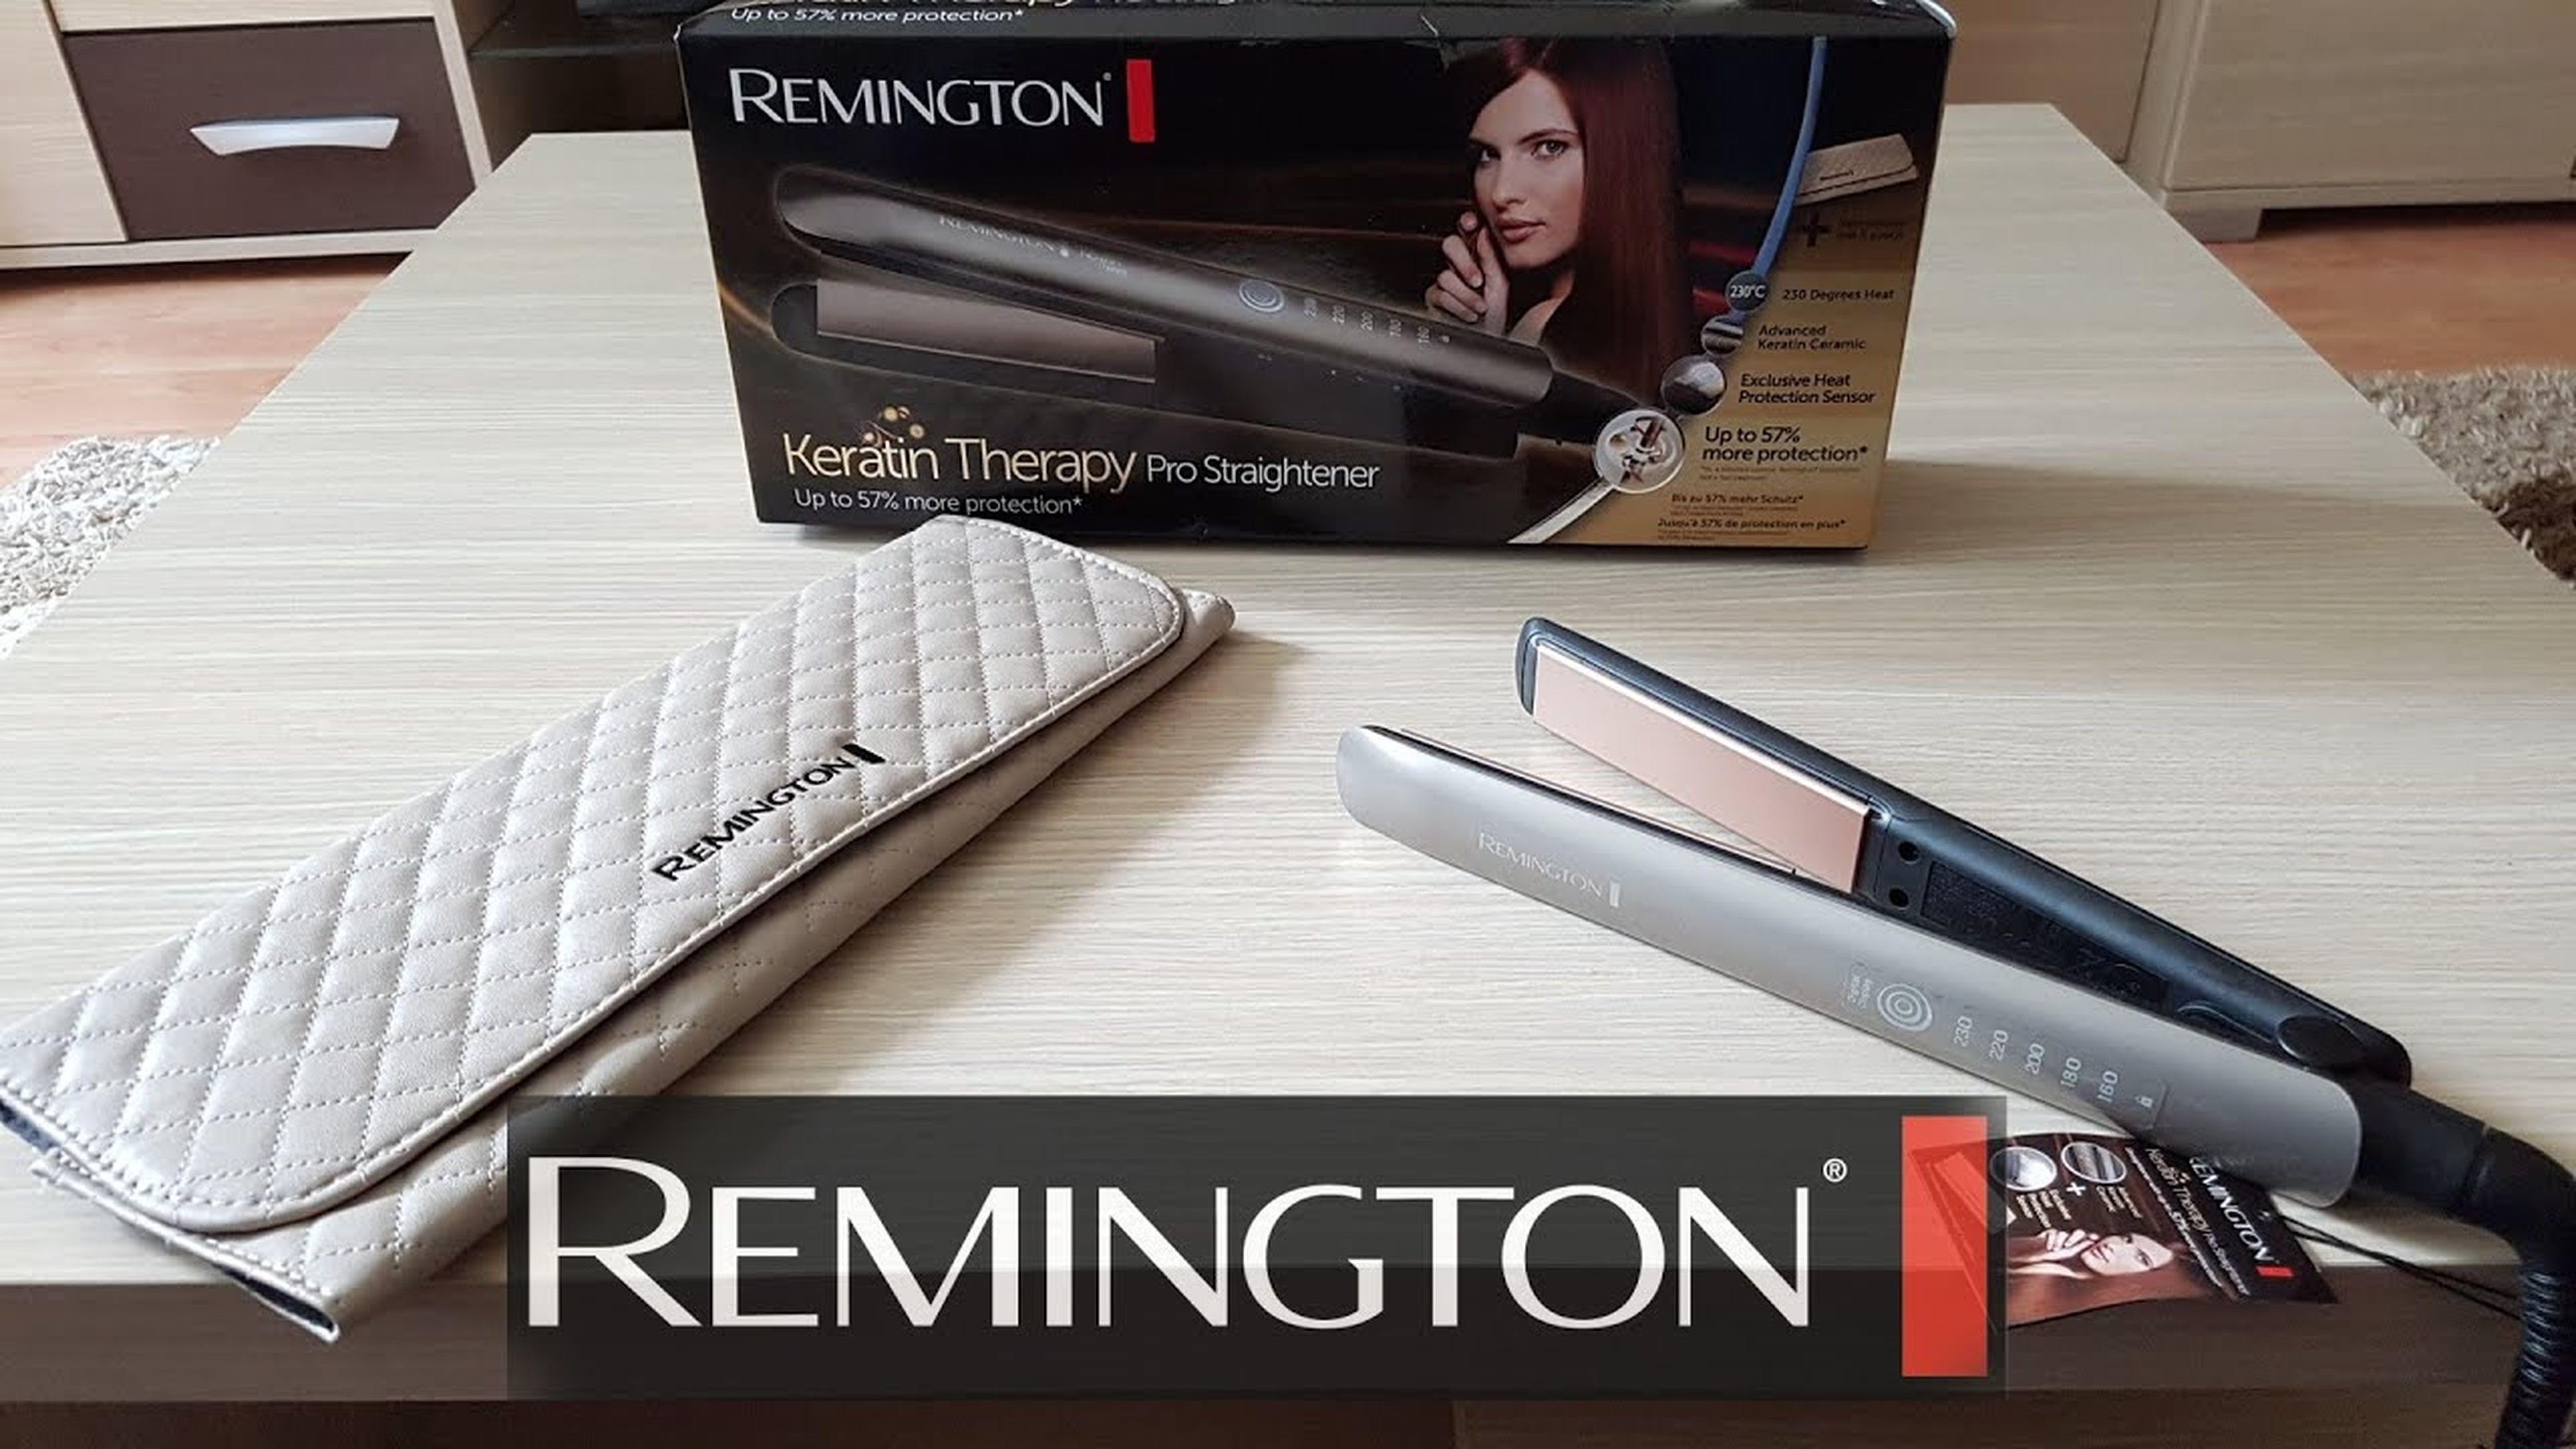 Plancha de pelo Remington Keratin Therapy Pro al 69 %: ¿Merece la pena? -  Tech Advisor